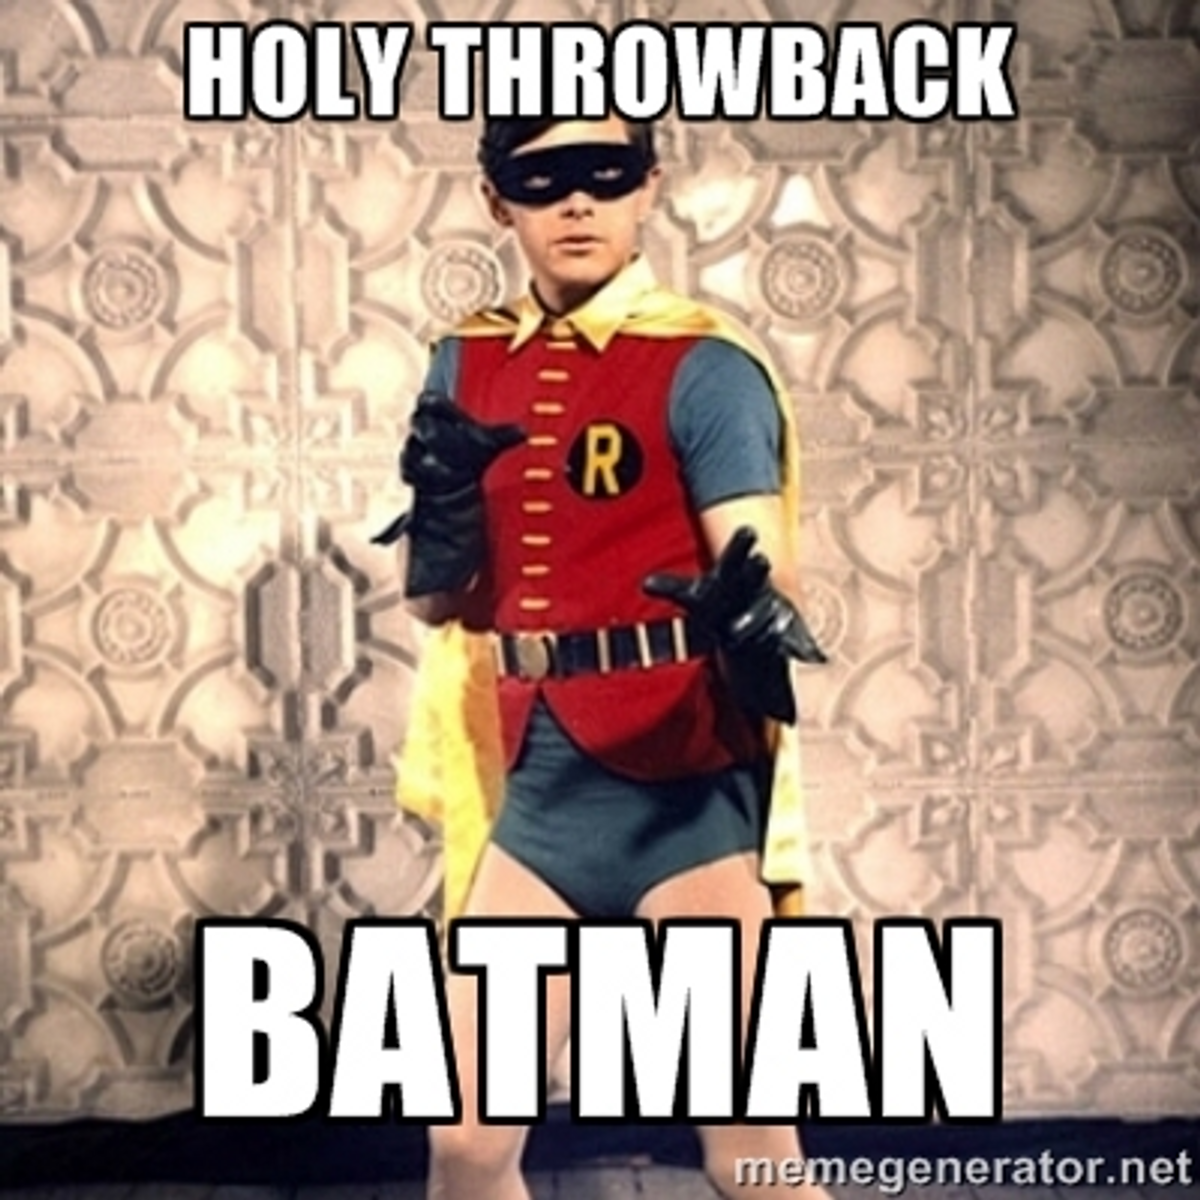 Holy Throwback, Batman!